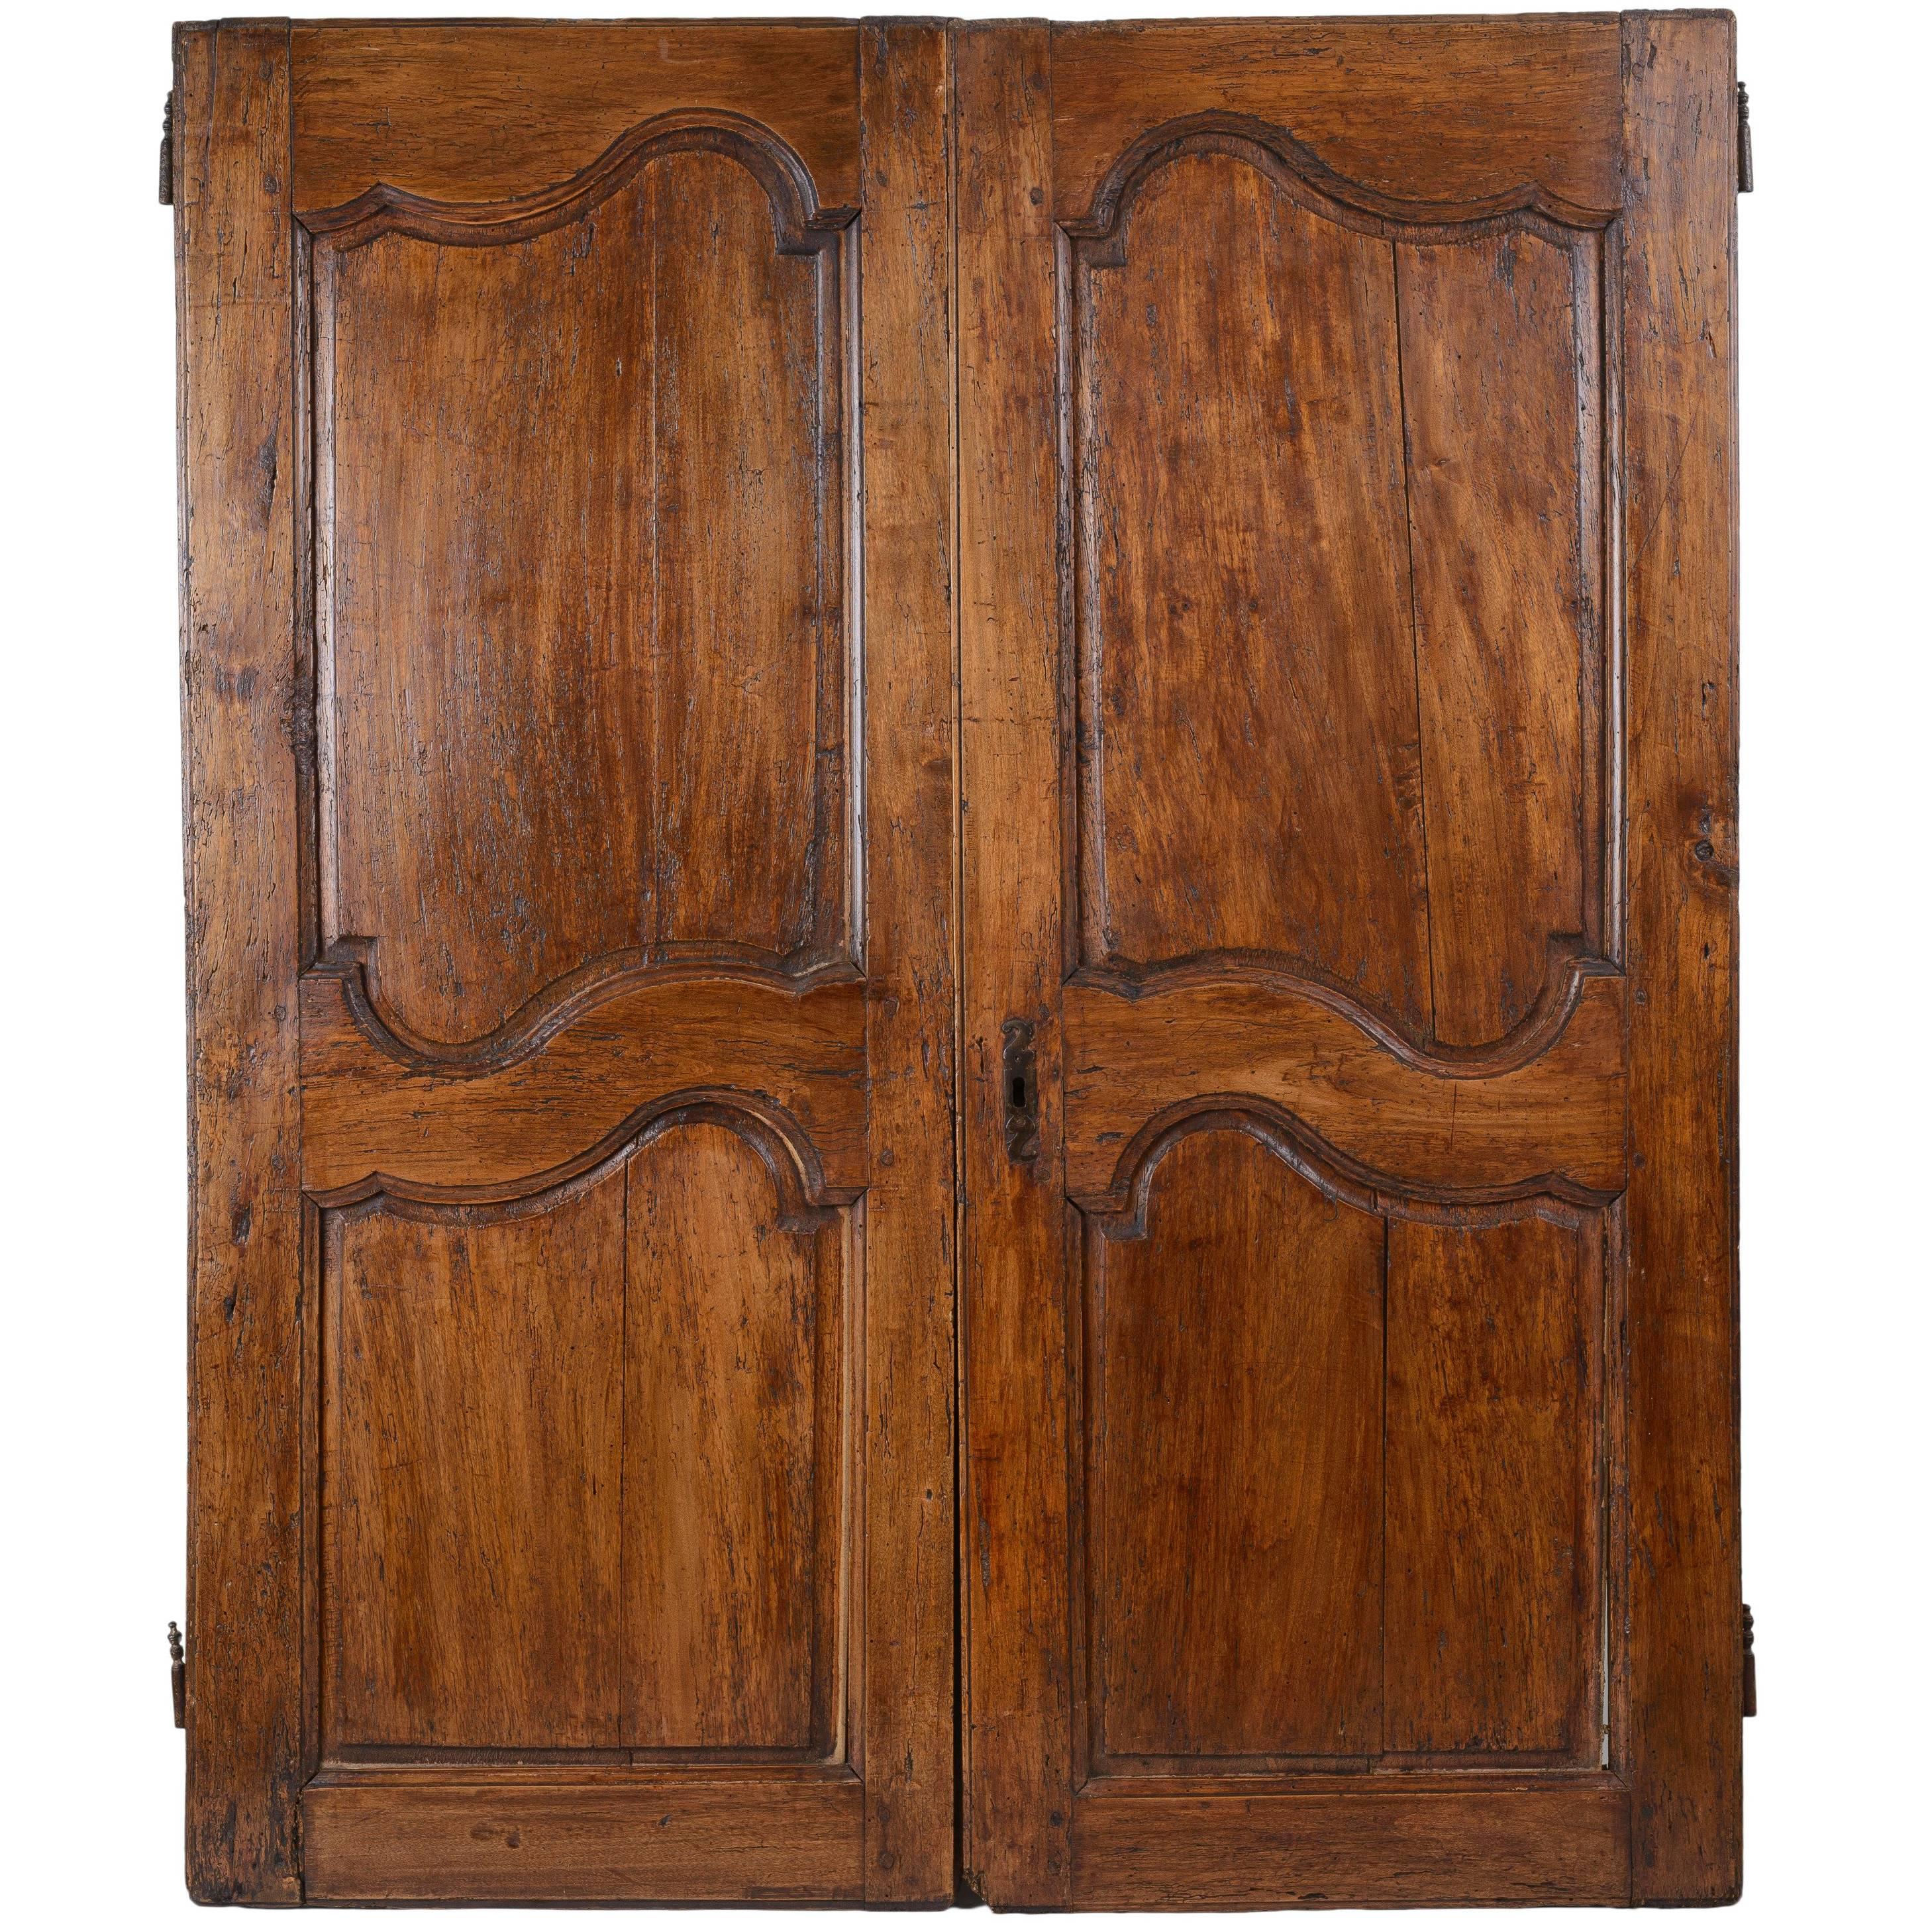 Türen im Louis-XV-Stil des 18. Jahrhunderts